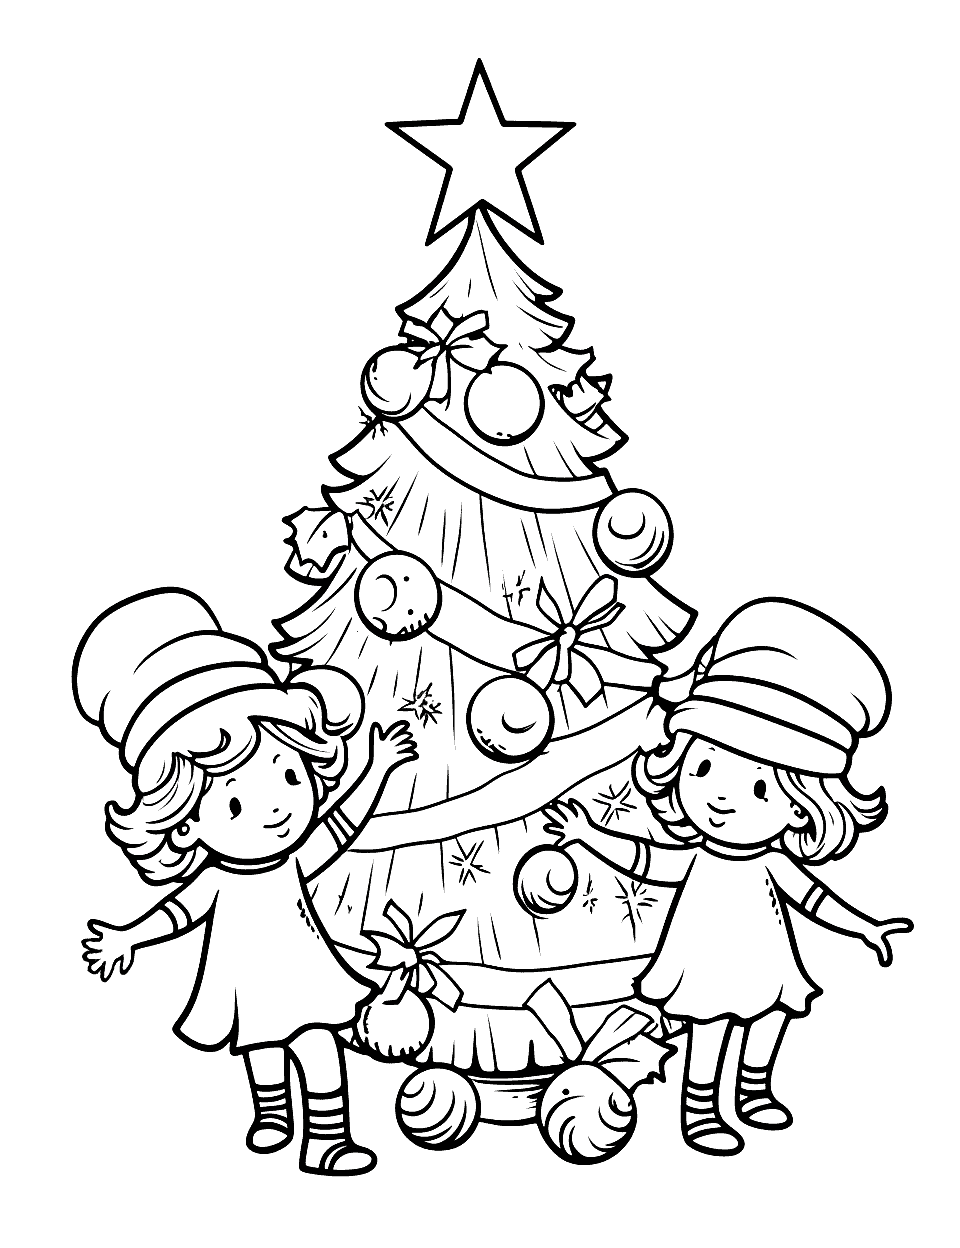 Sugar Plum Fairies Christmas Coloring Page - Sugar plum fairies dancing around a Christmas tree.